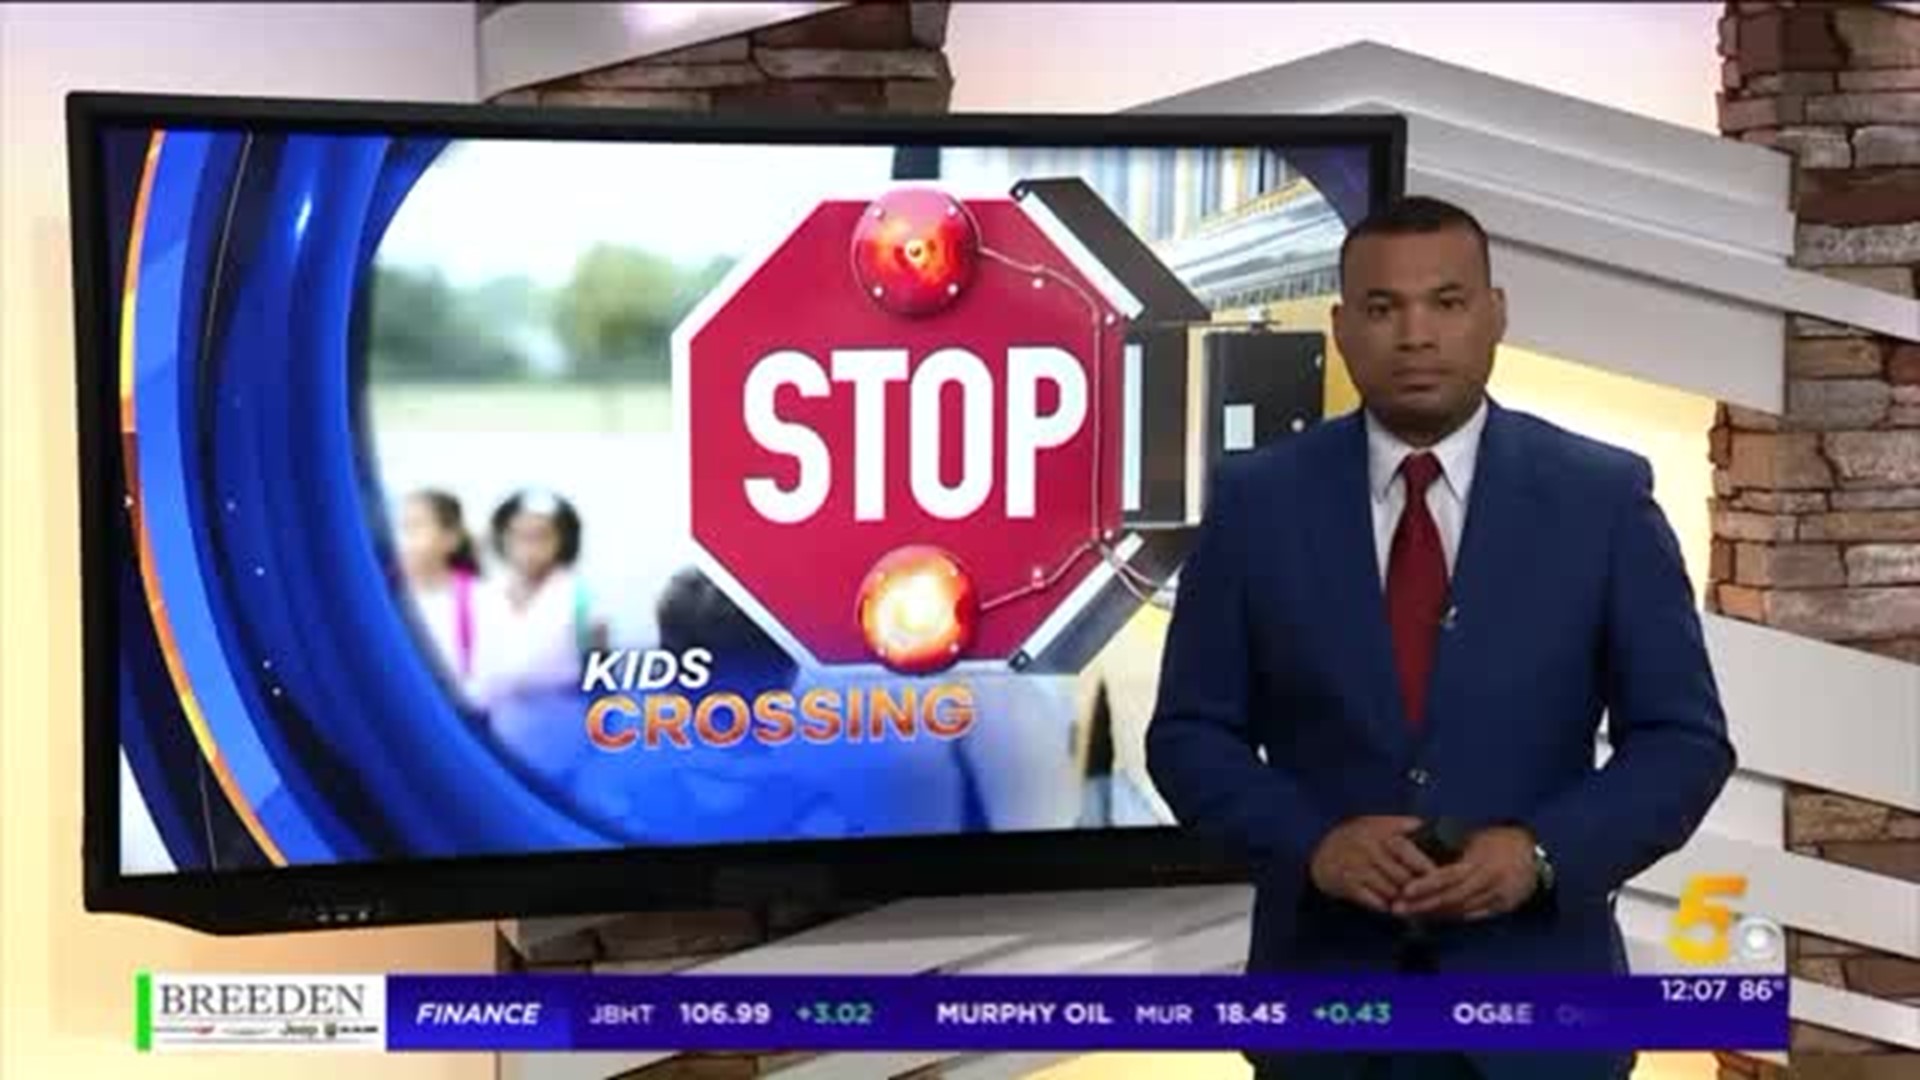 Muldrow Drivers Blowing Through Crosswalks, Putting Kids in Danger